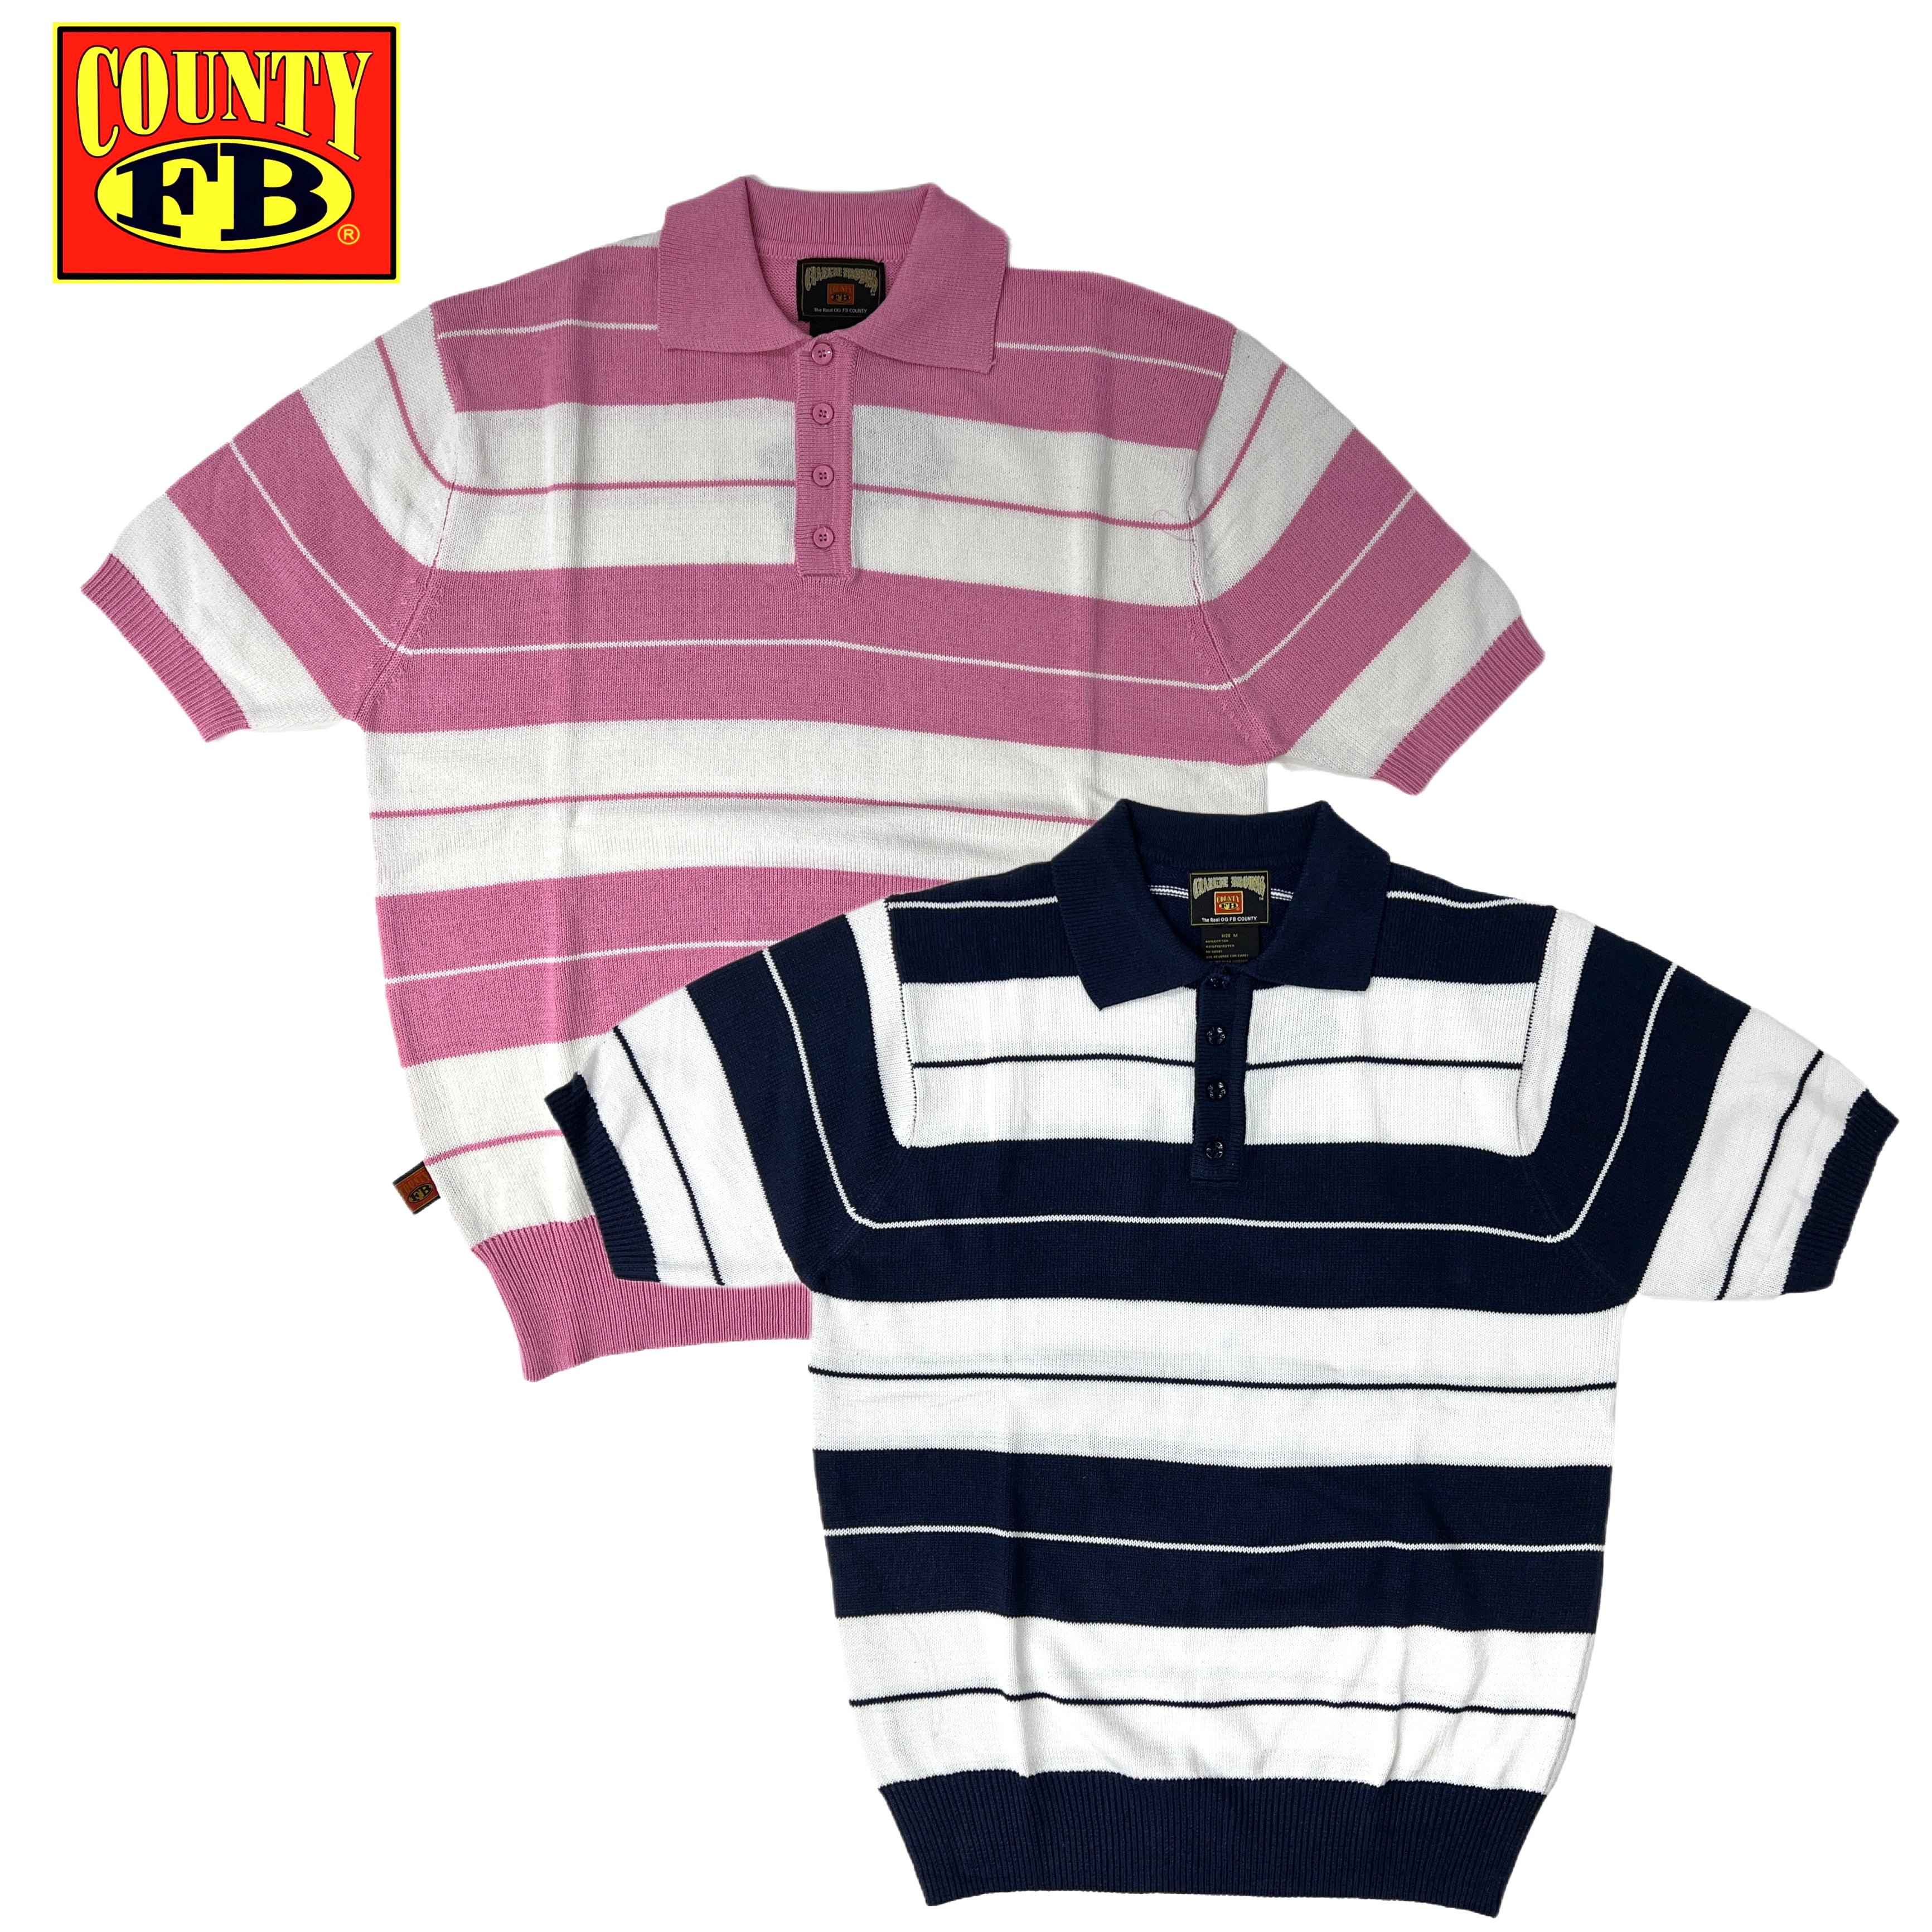 FB County Charlie Brown Shirt - Pink/White & Navy/White